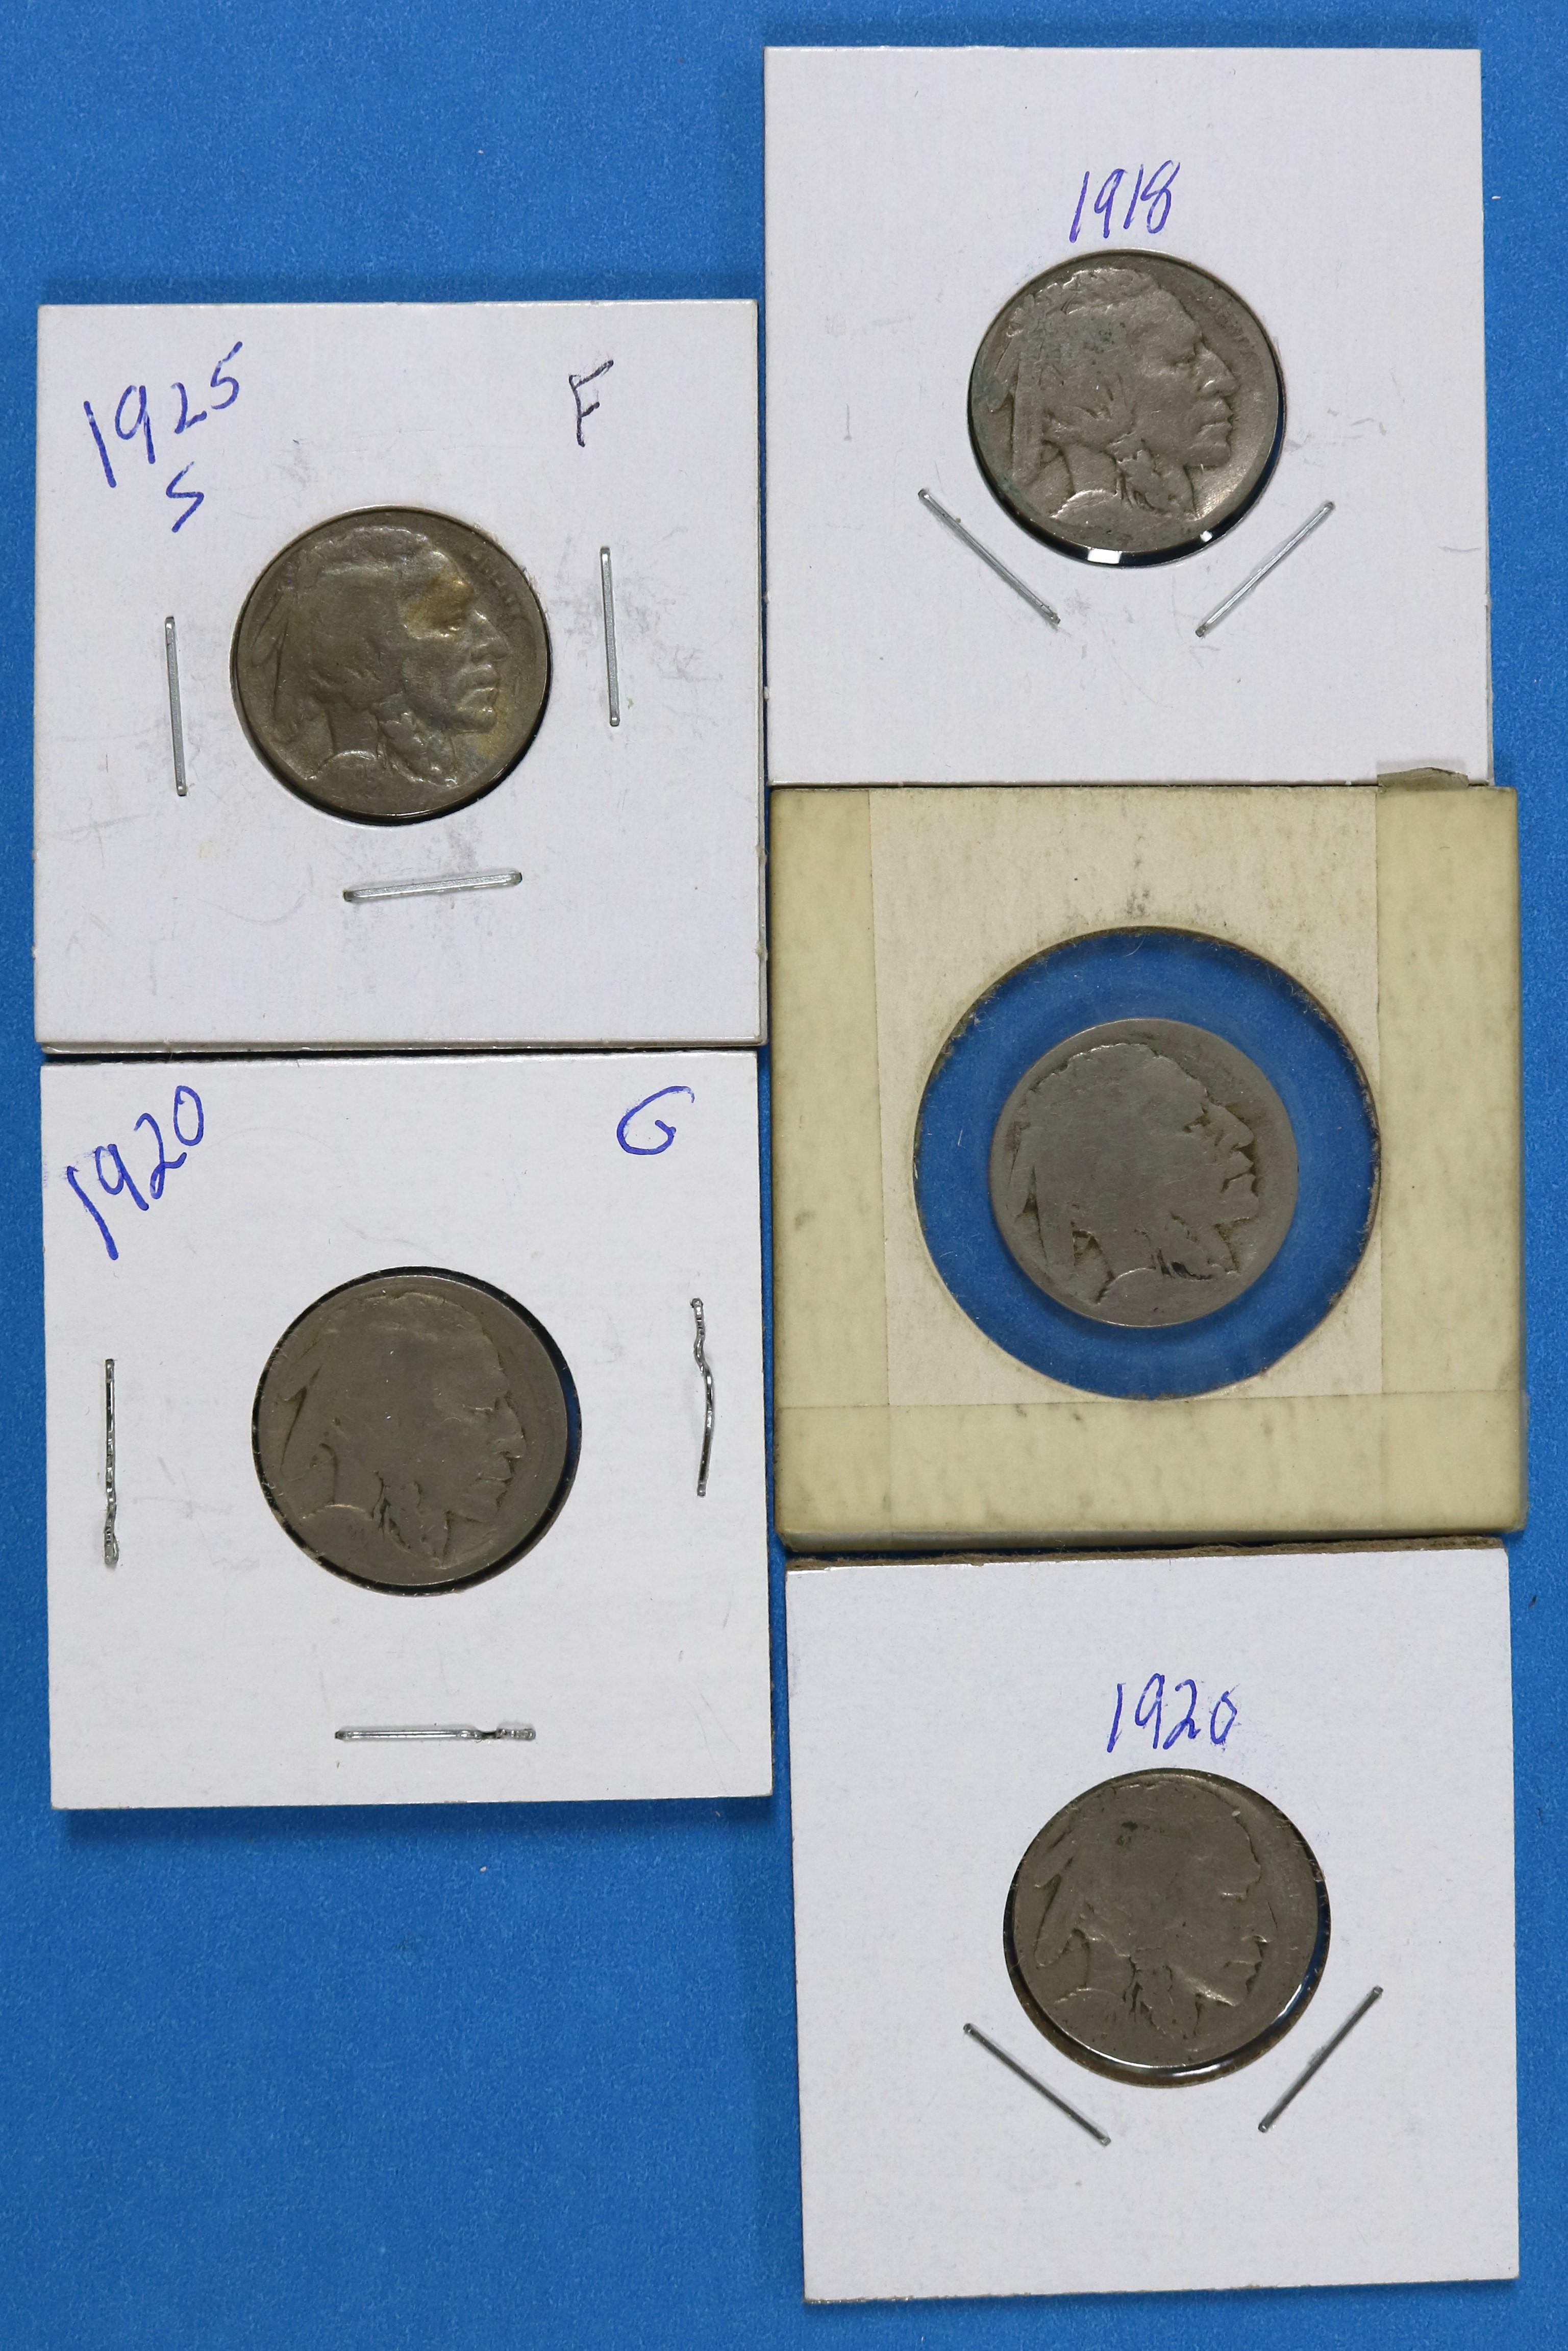 Lot of 5 Buffalo Nickels 1918-1925